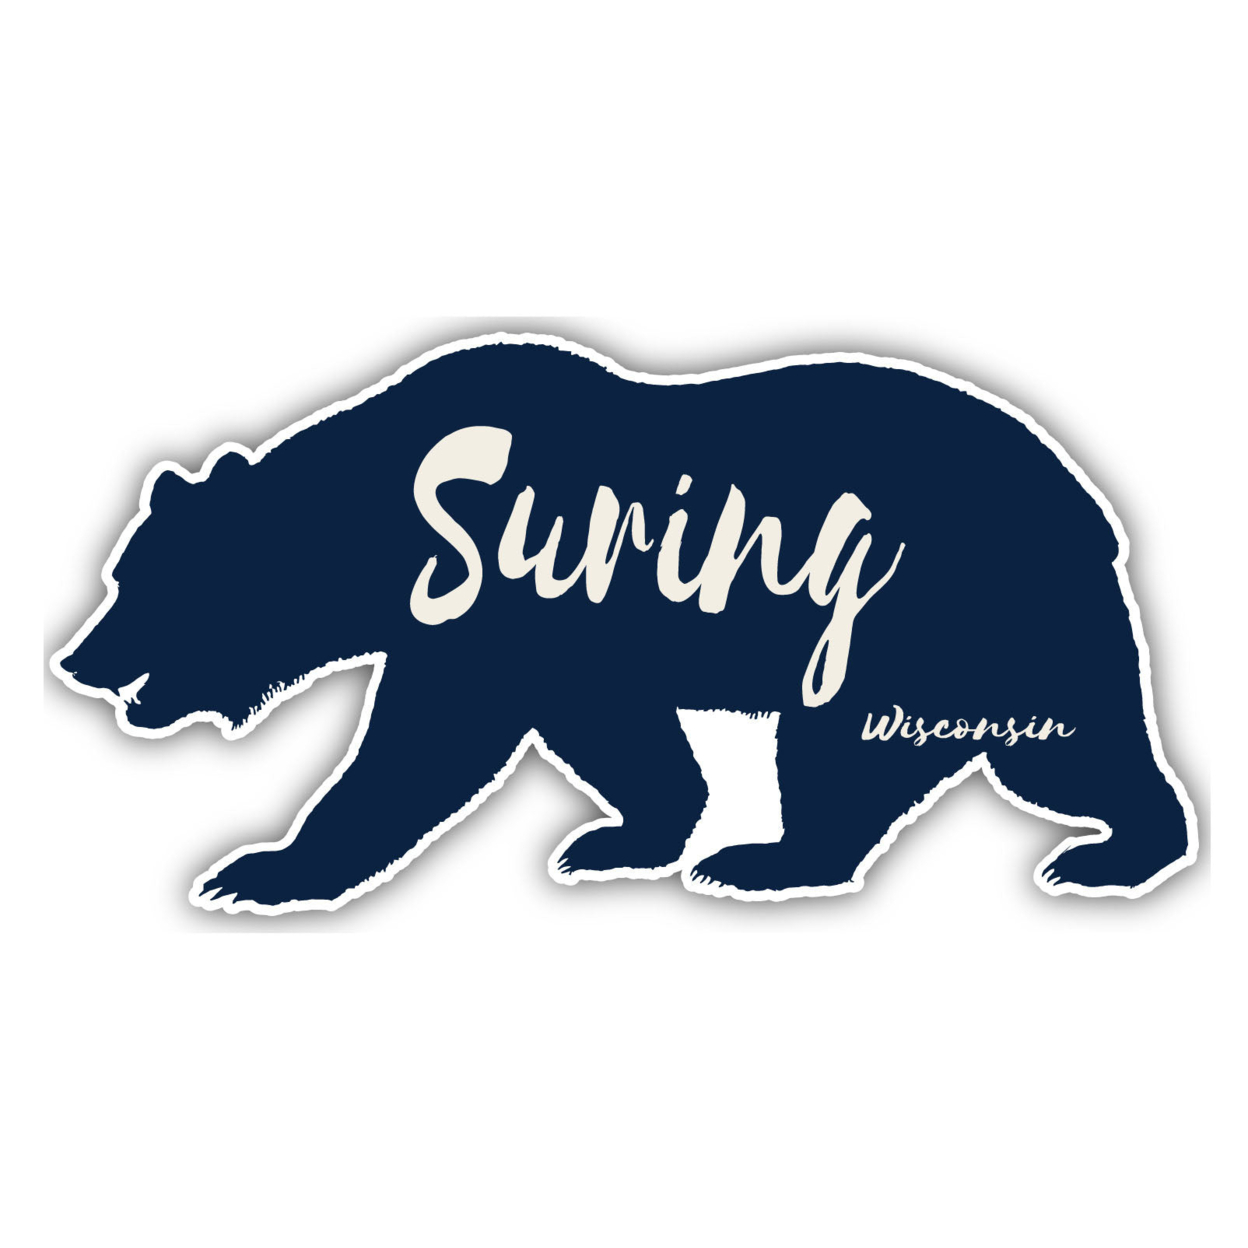 Suring Wisconsin Souvenir Decorative Stickers (Choose Theme And Size) - Single Unit, 4-Inch, Bear